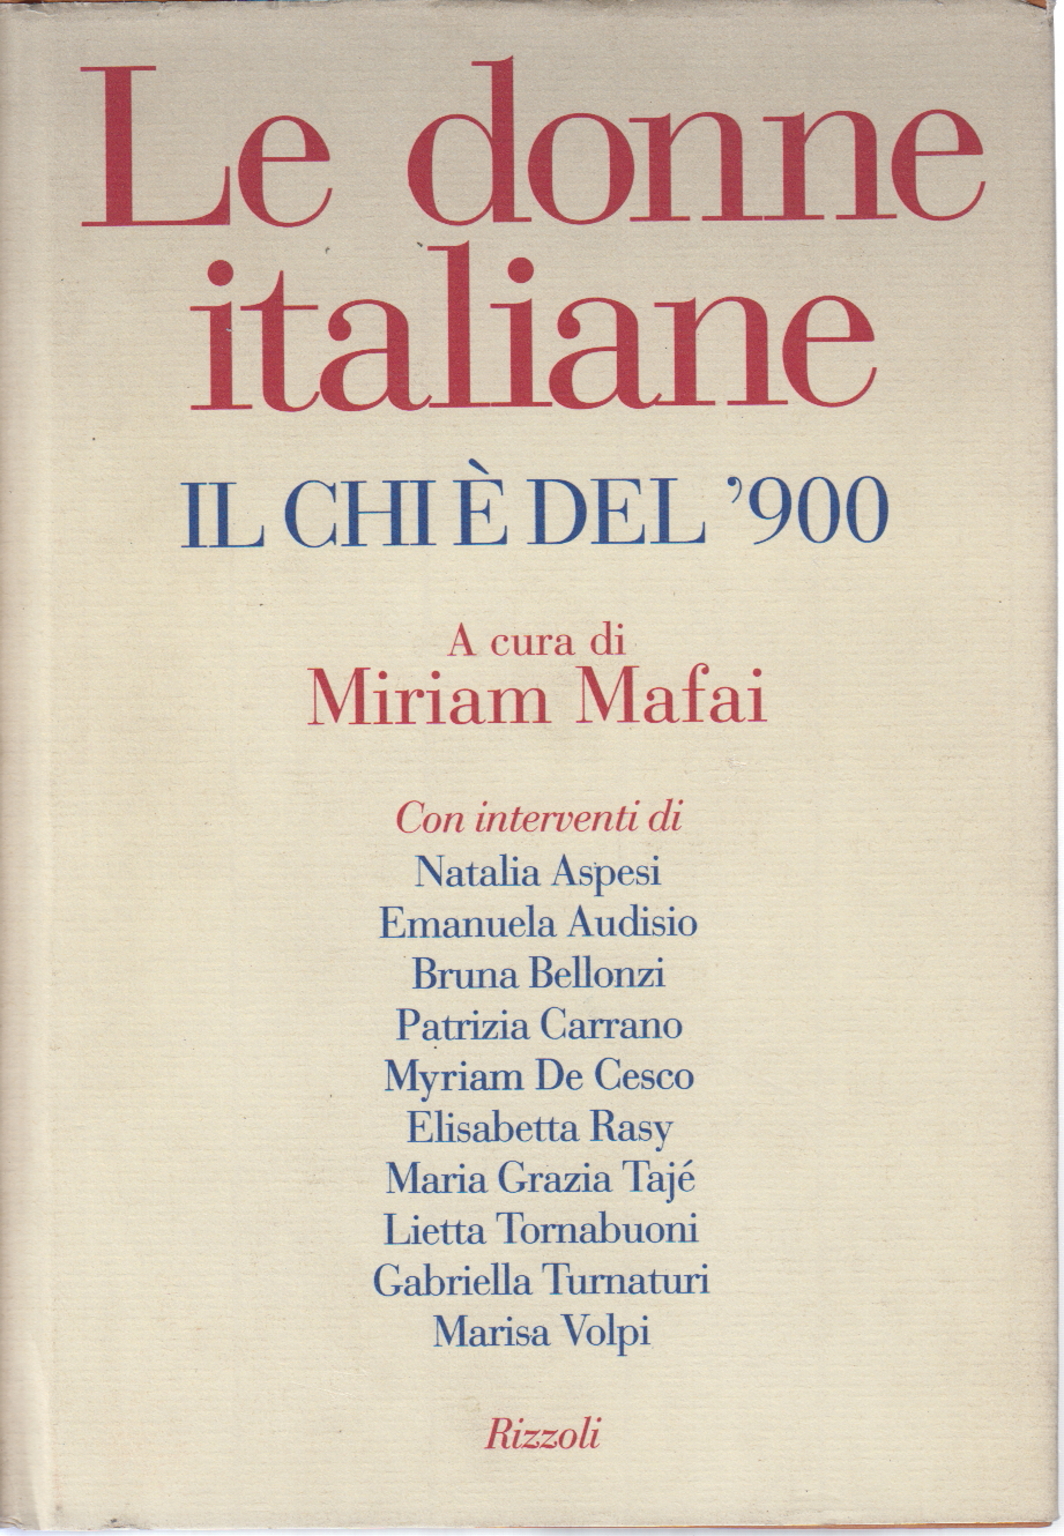 The Italian women, Miriam Mafai